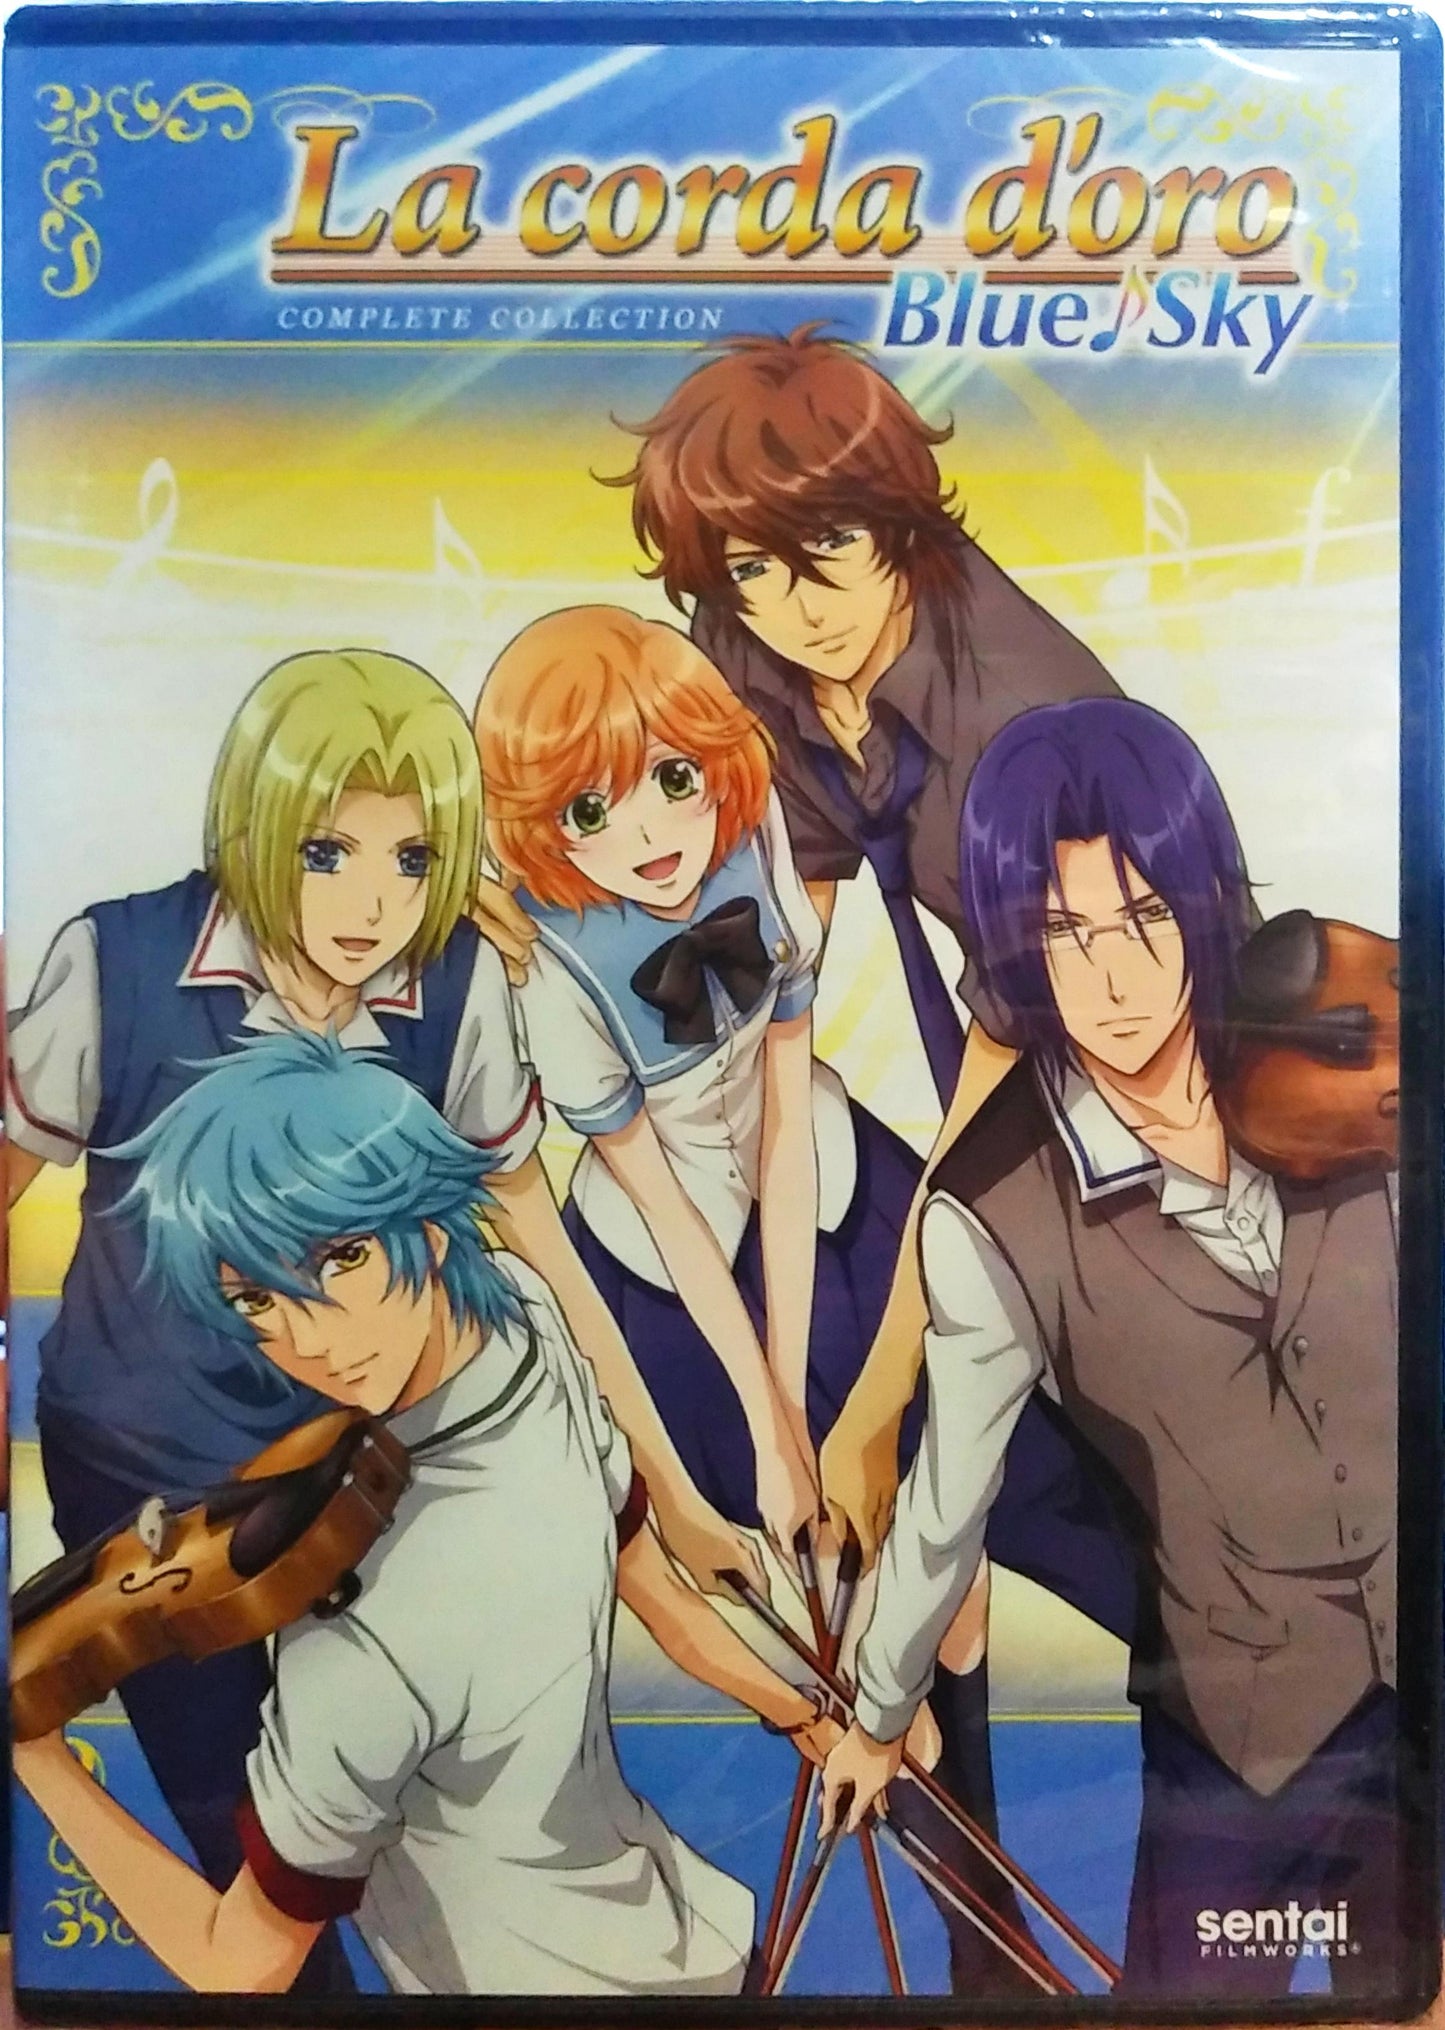 La Corda d'Oro Blue Sky DVD Complete Collection Sealed